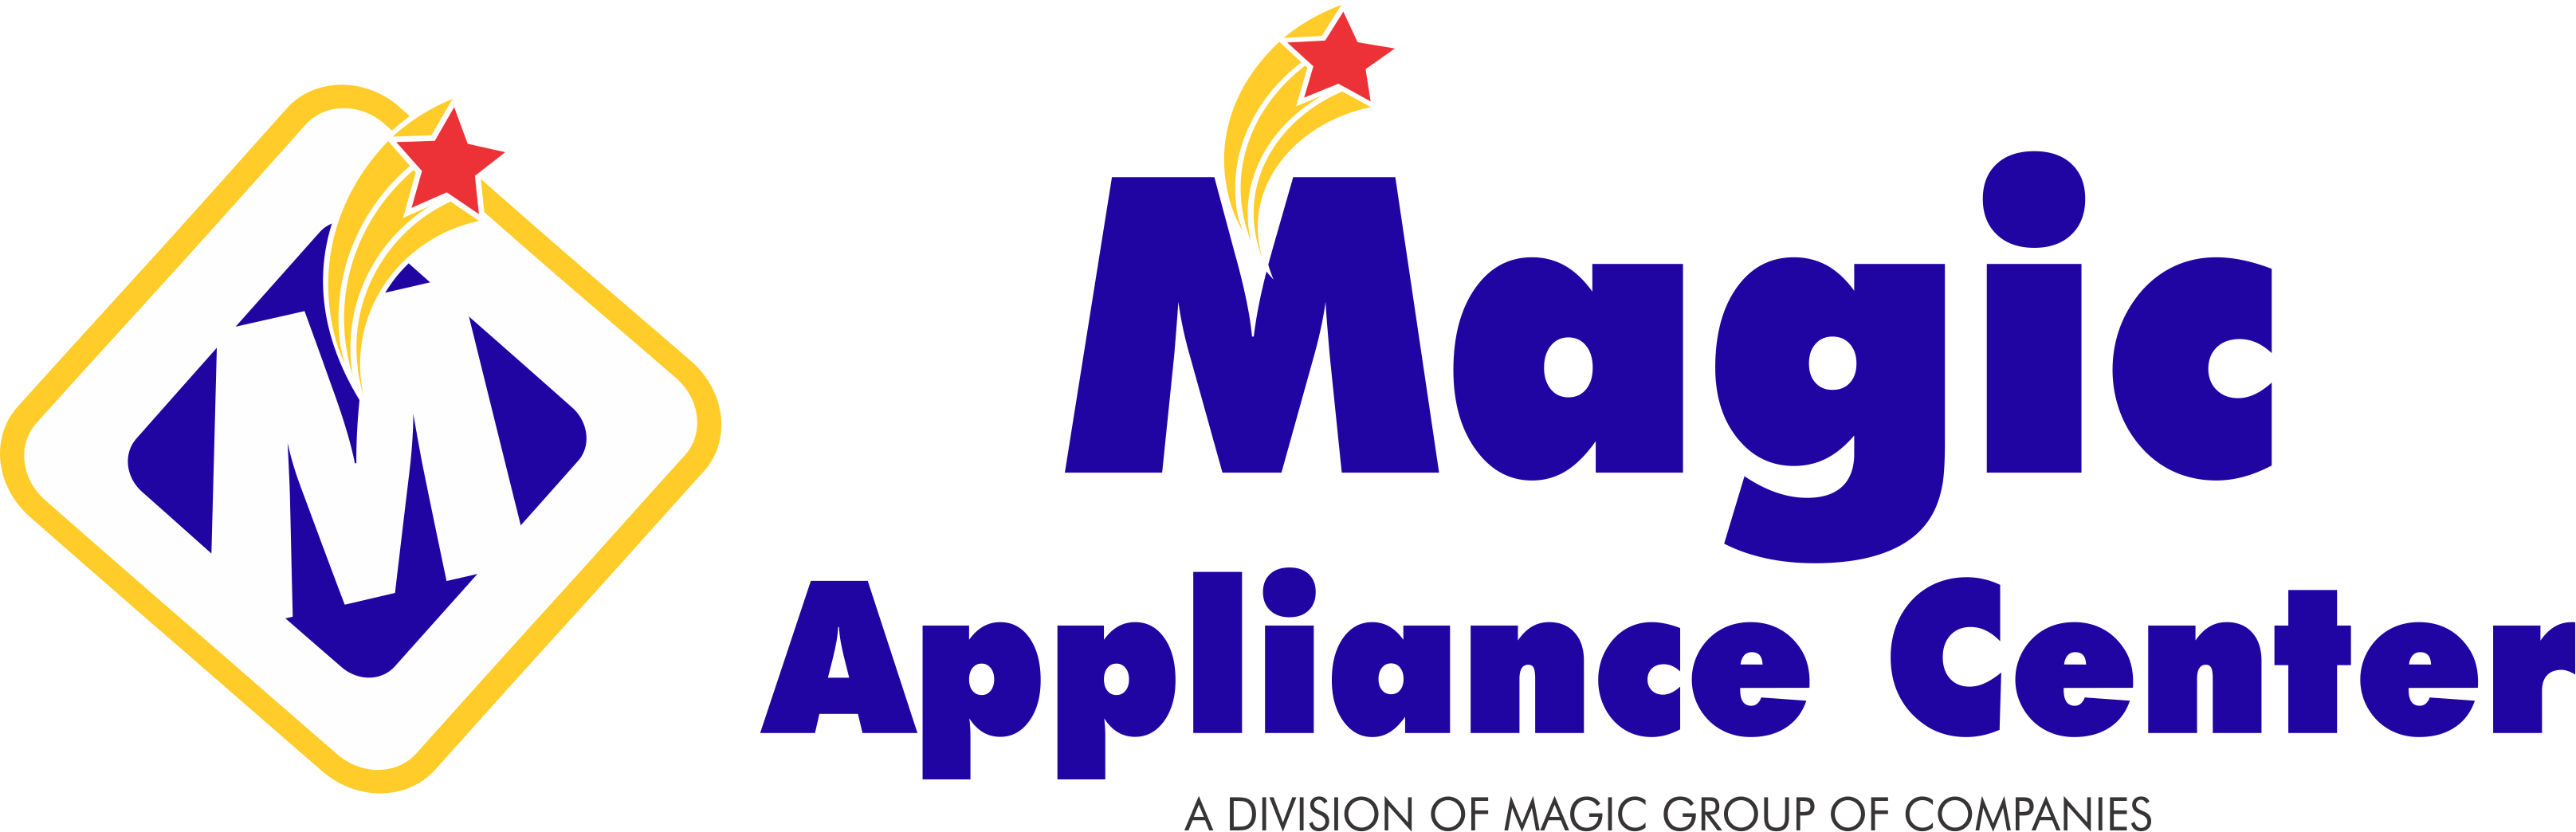 Magic Appliance